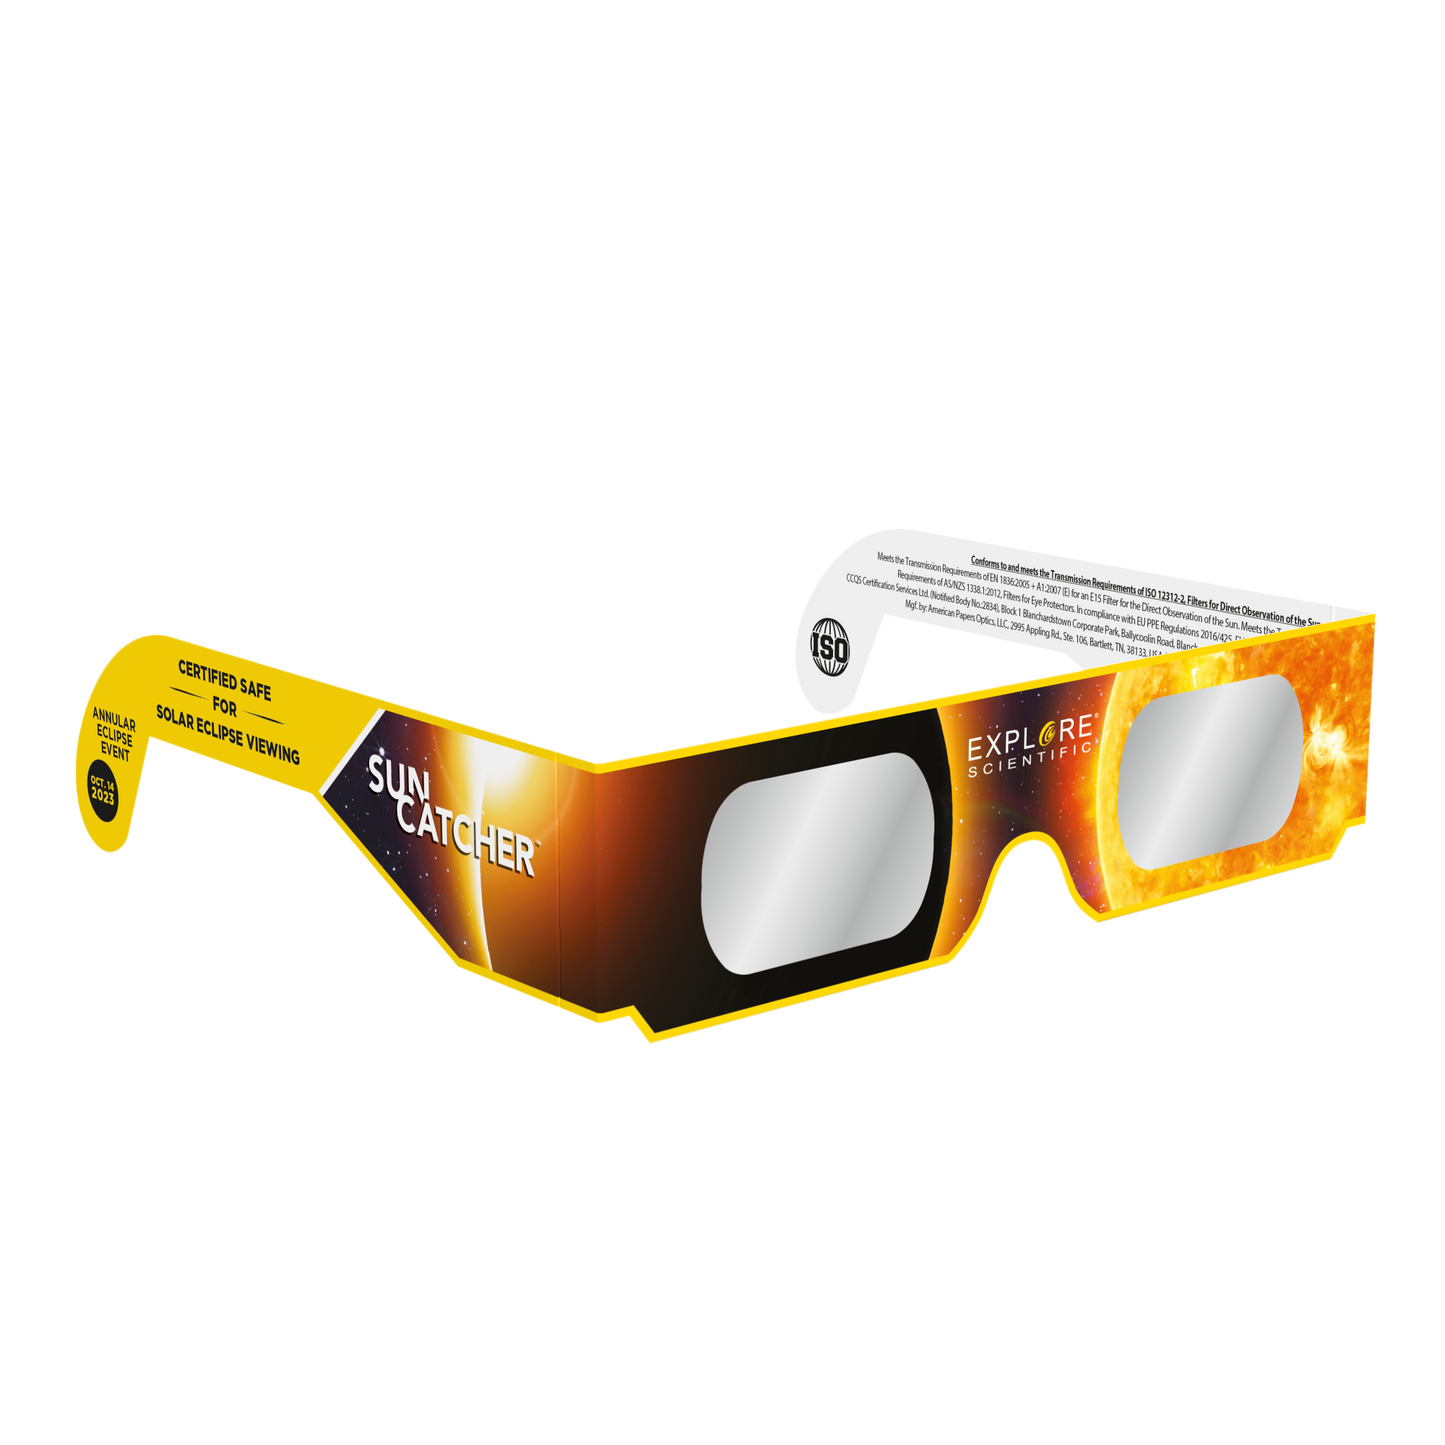 Solar Eclipse Glasses Display